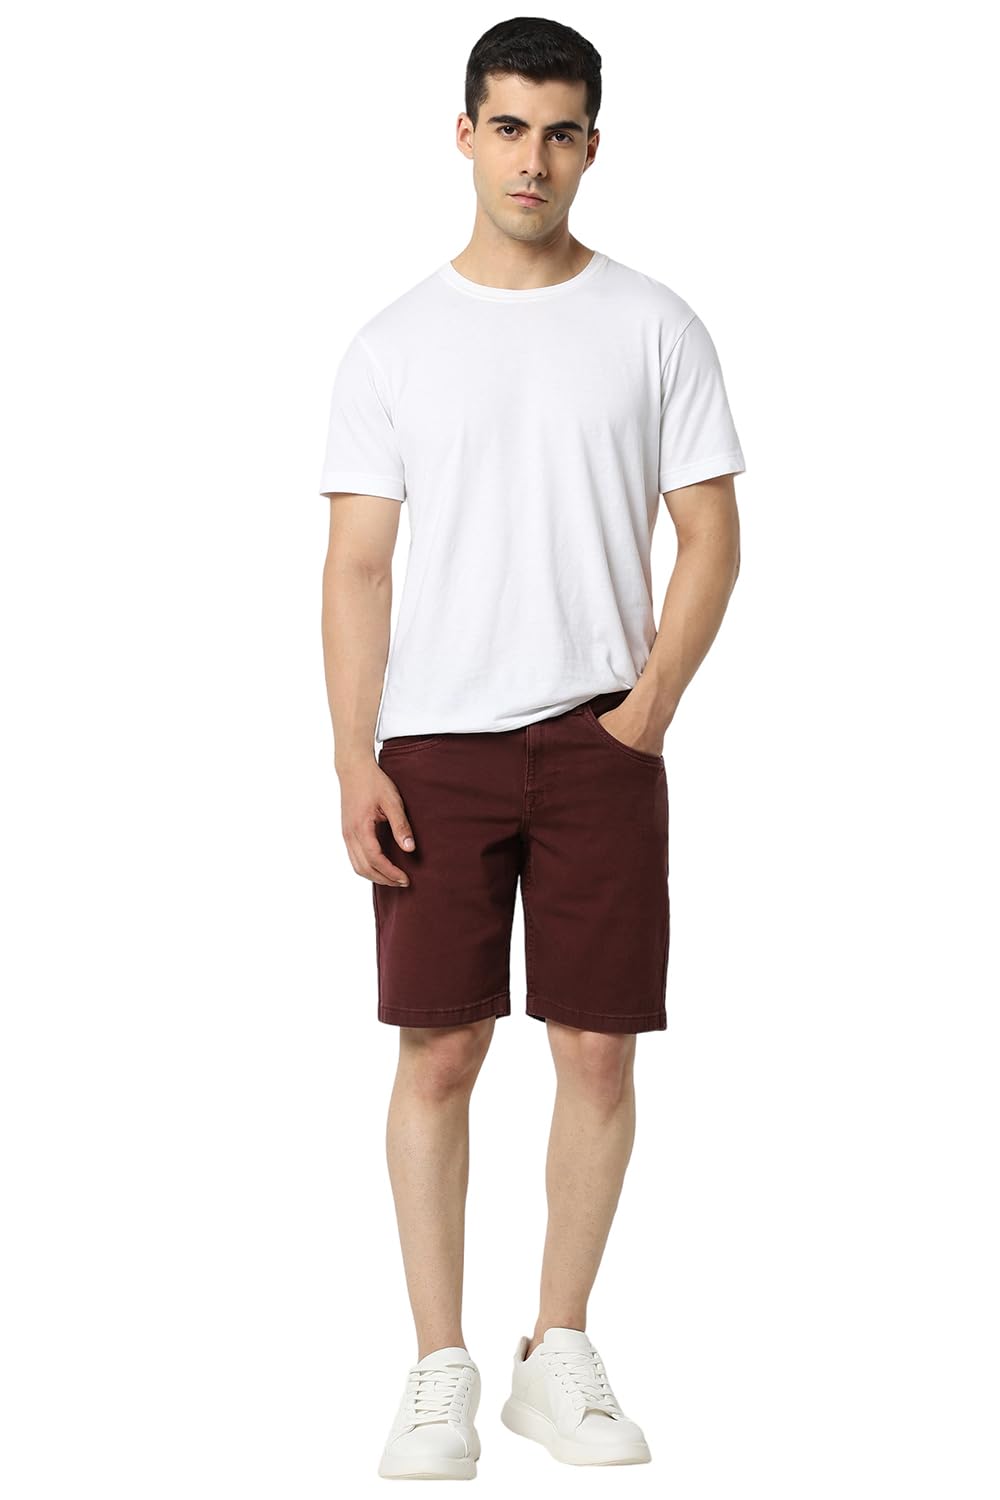 Van Heusen Men's Chino Shorts (VXSRCRGFU68803_Maroon